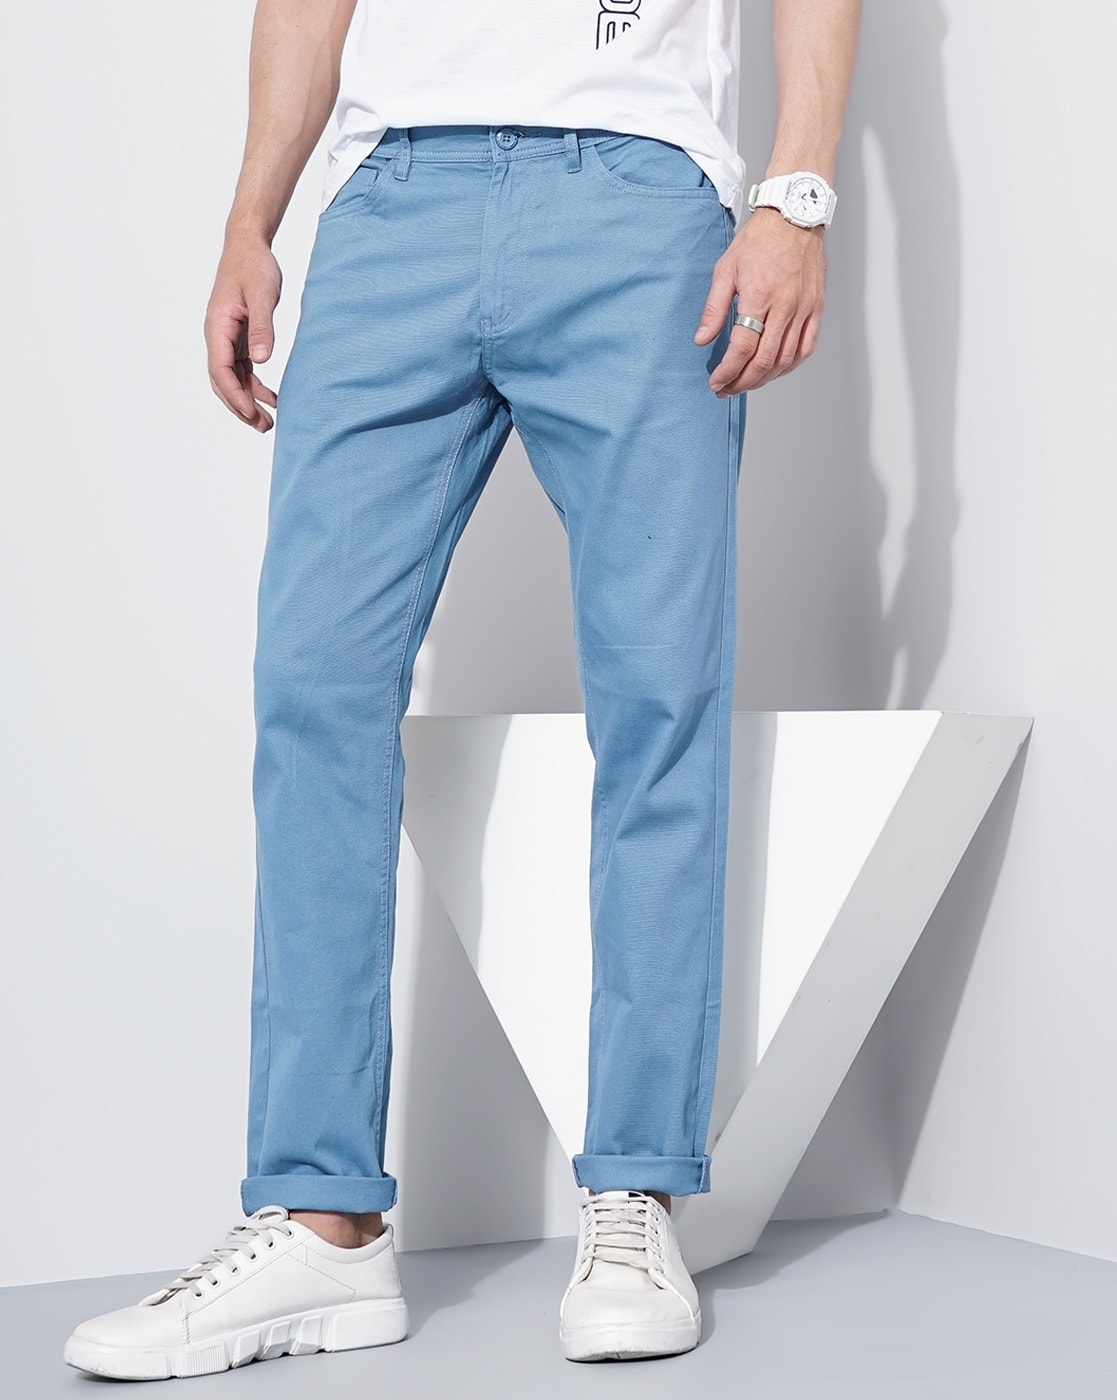 Boys Solid Cotton Blue Smart Chino Pants